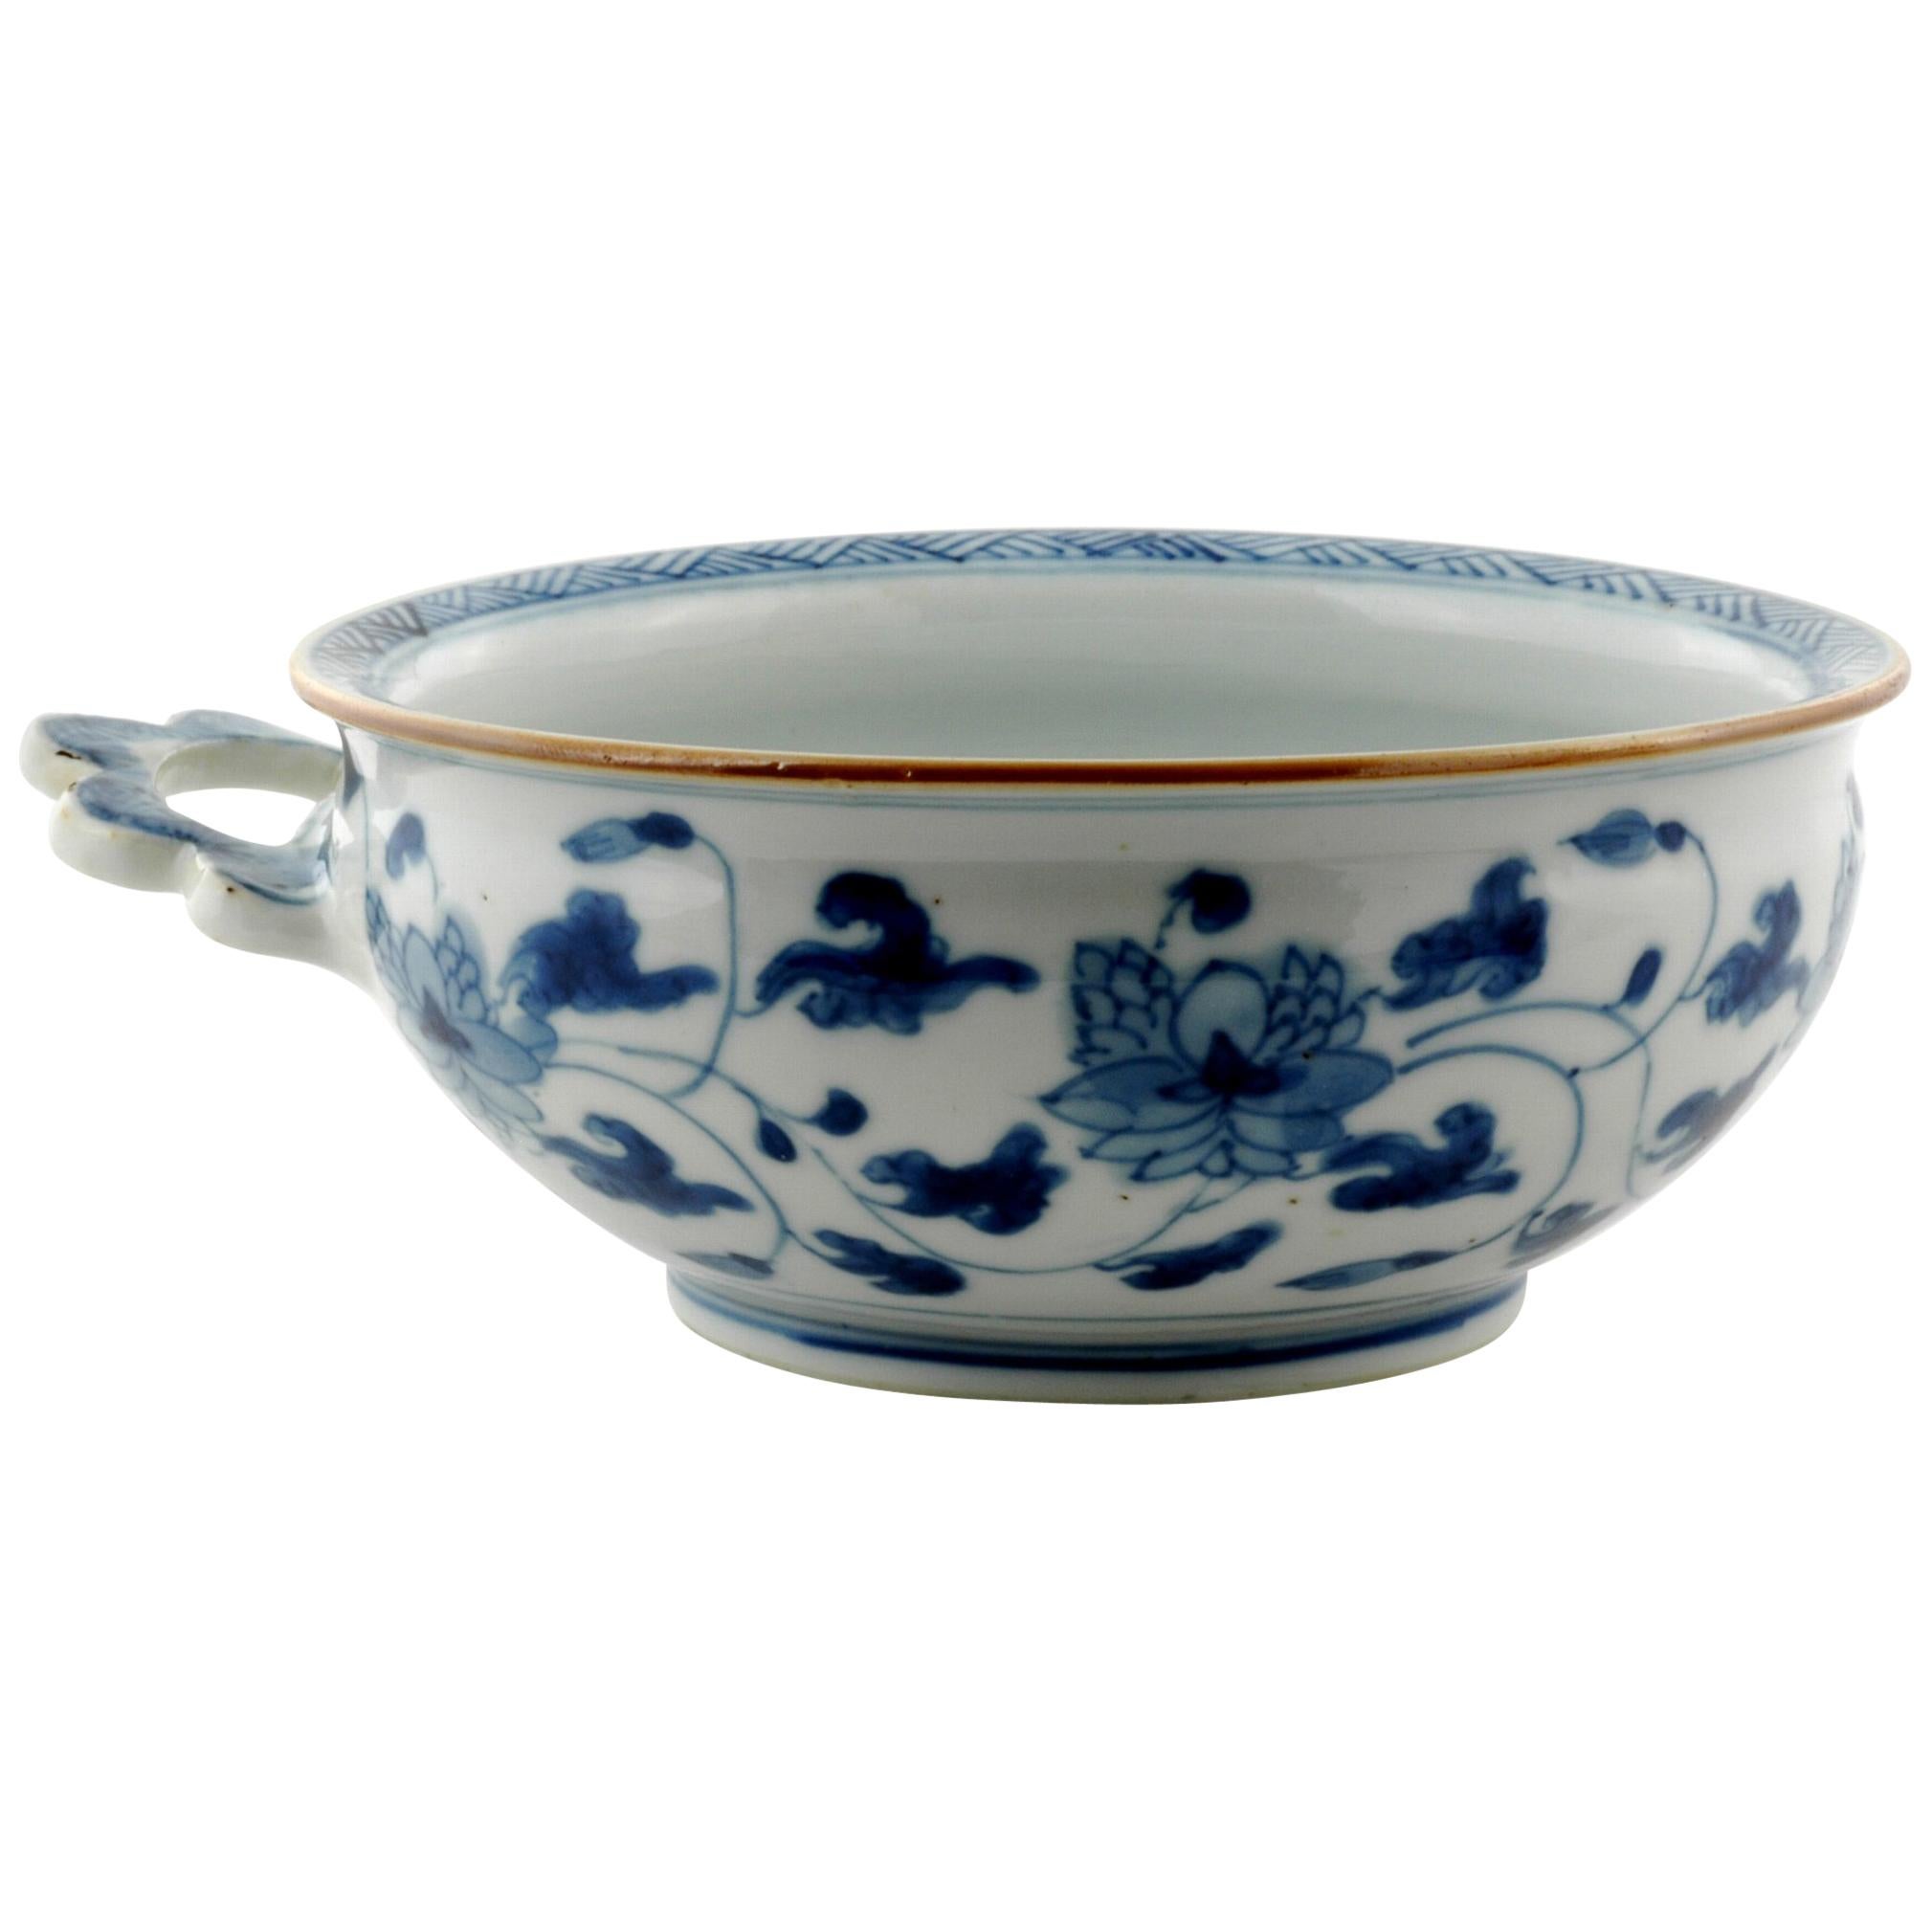 Good Chinese Export Porcelain Porringer For Sale